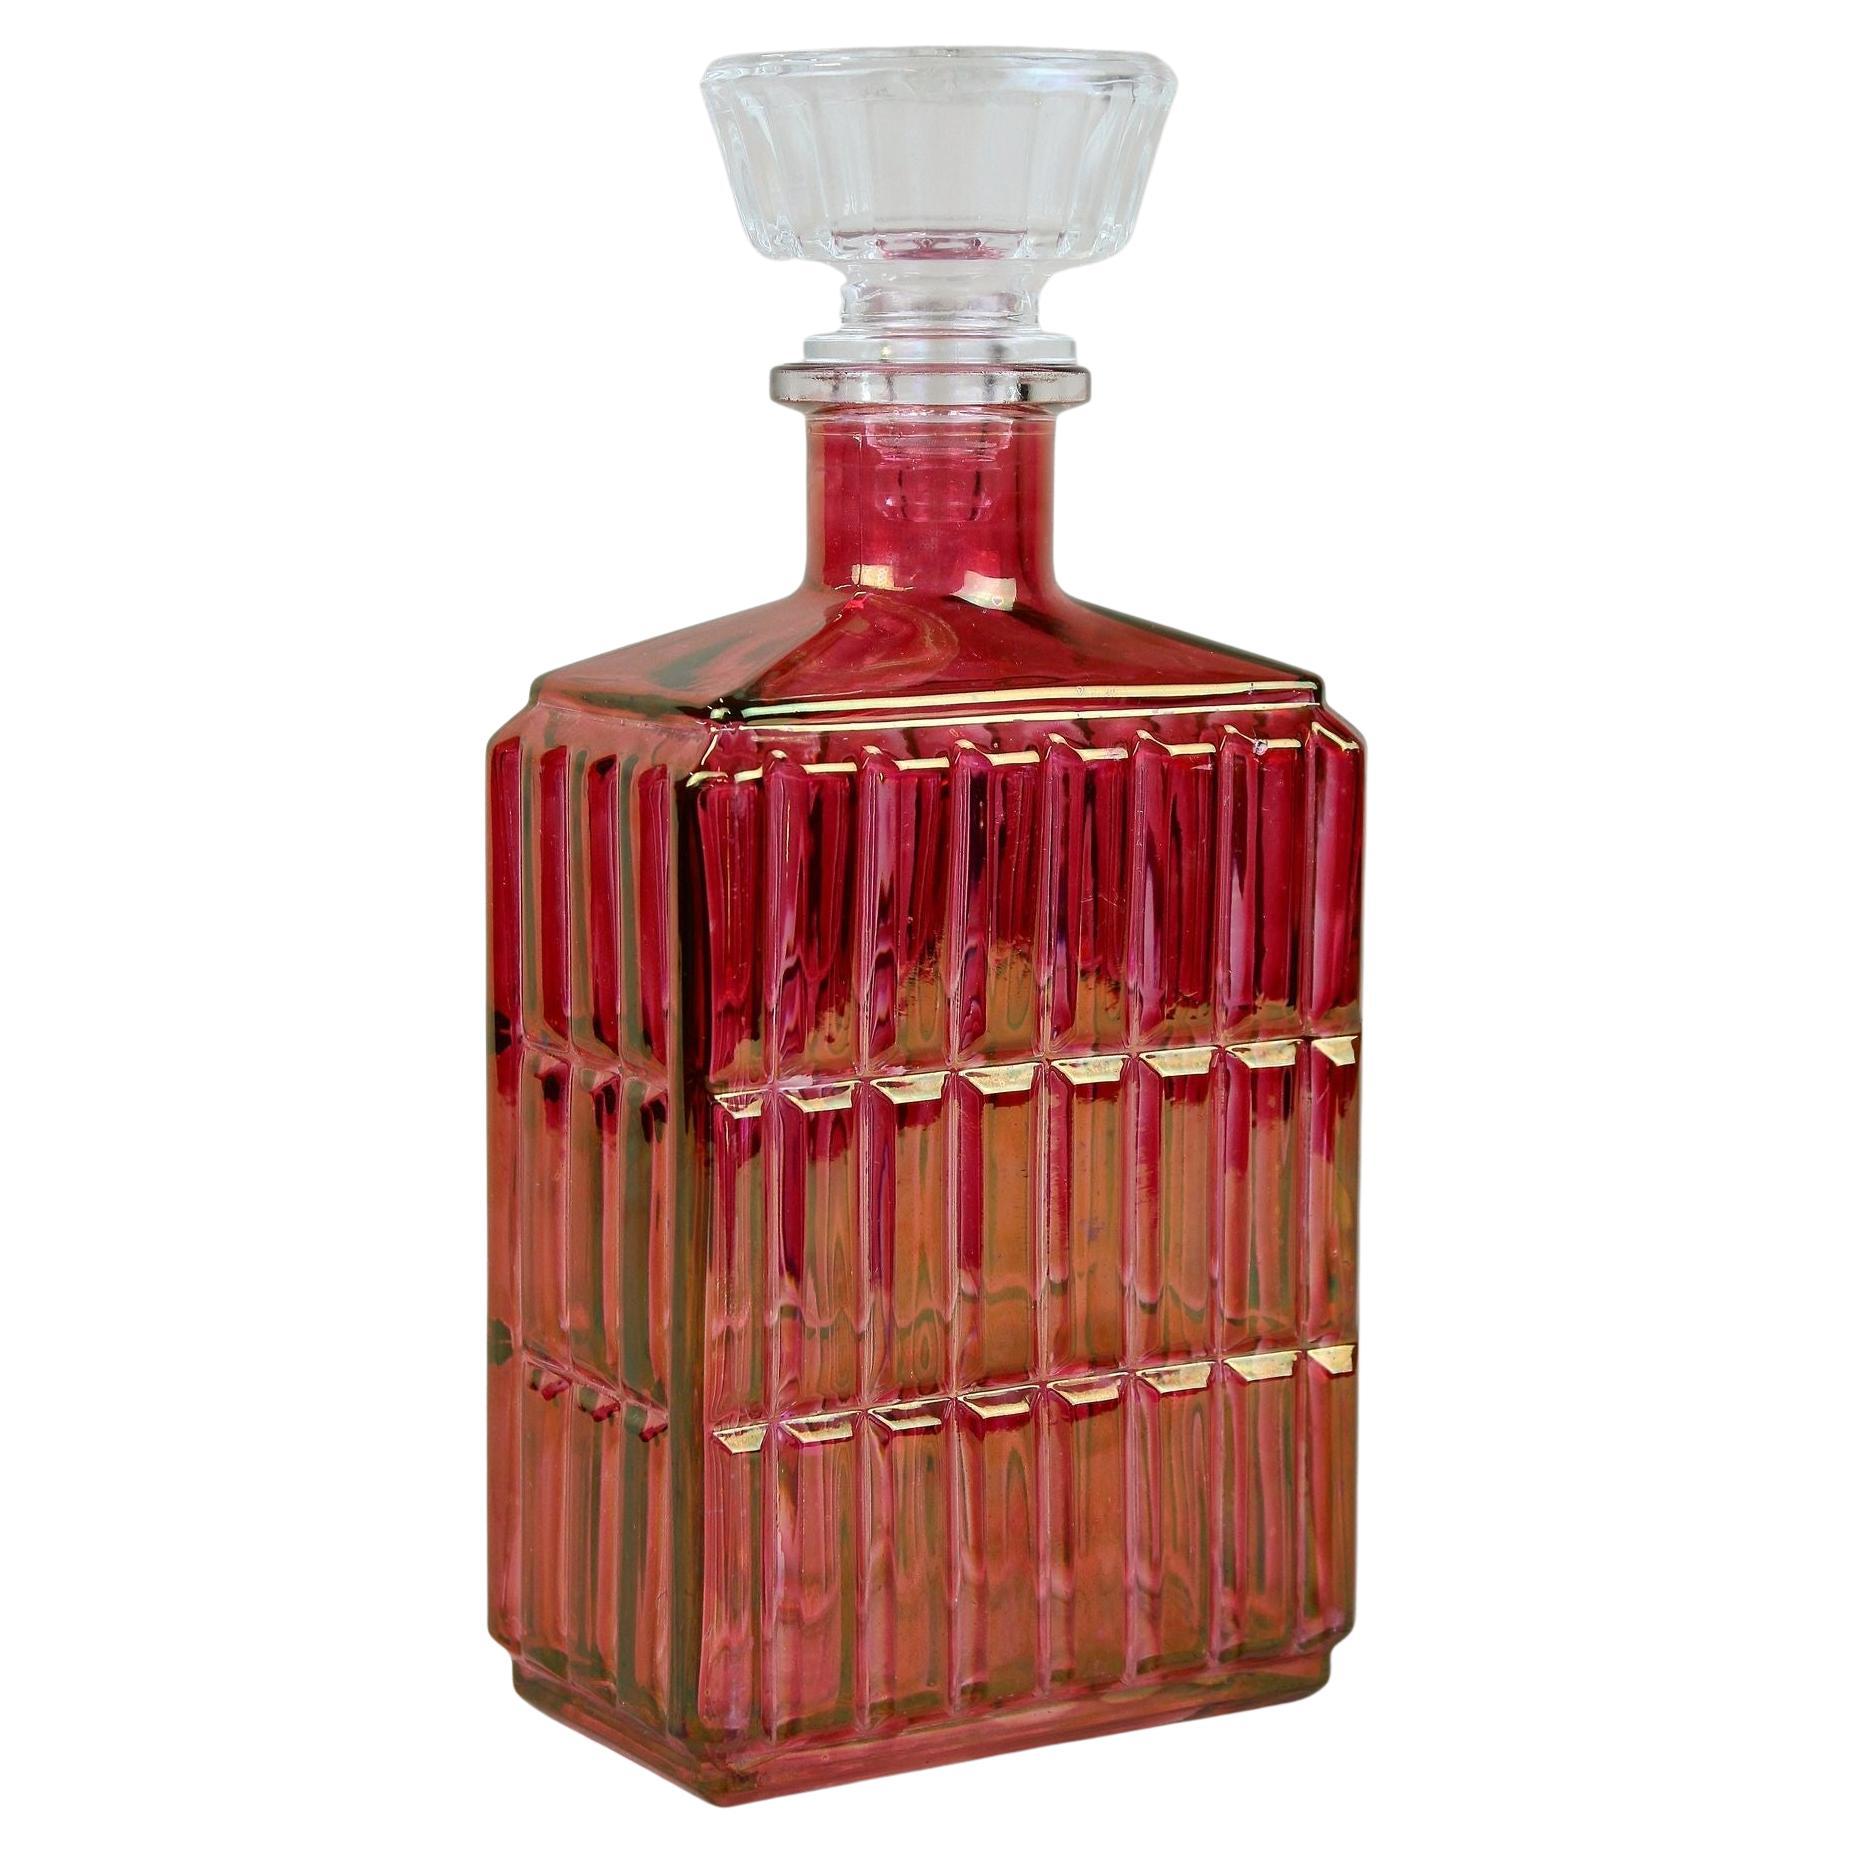 20th Century Art Deco Glass Decanter or Liquor Bottle, Austria ca. 1930